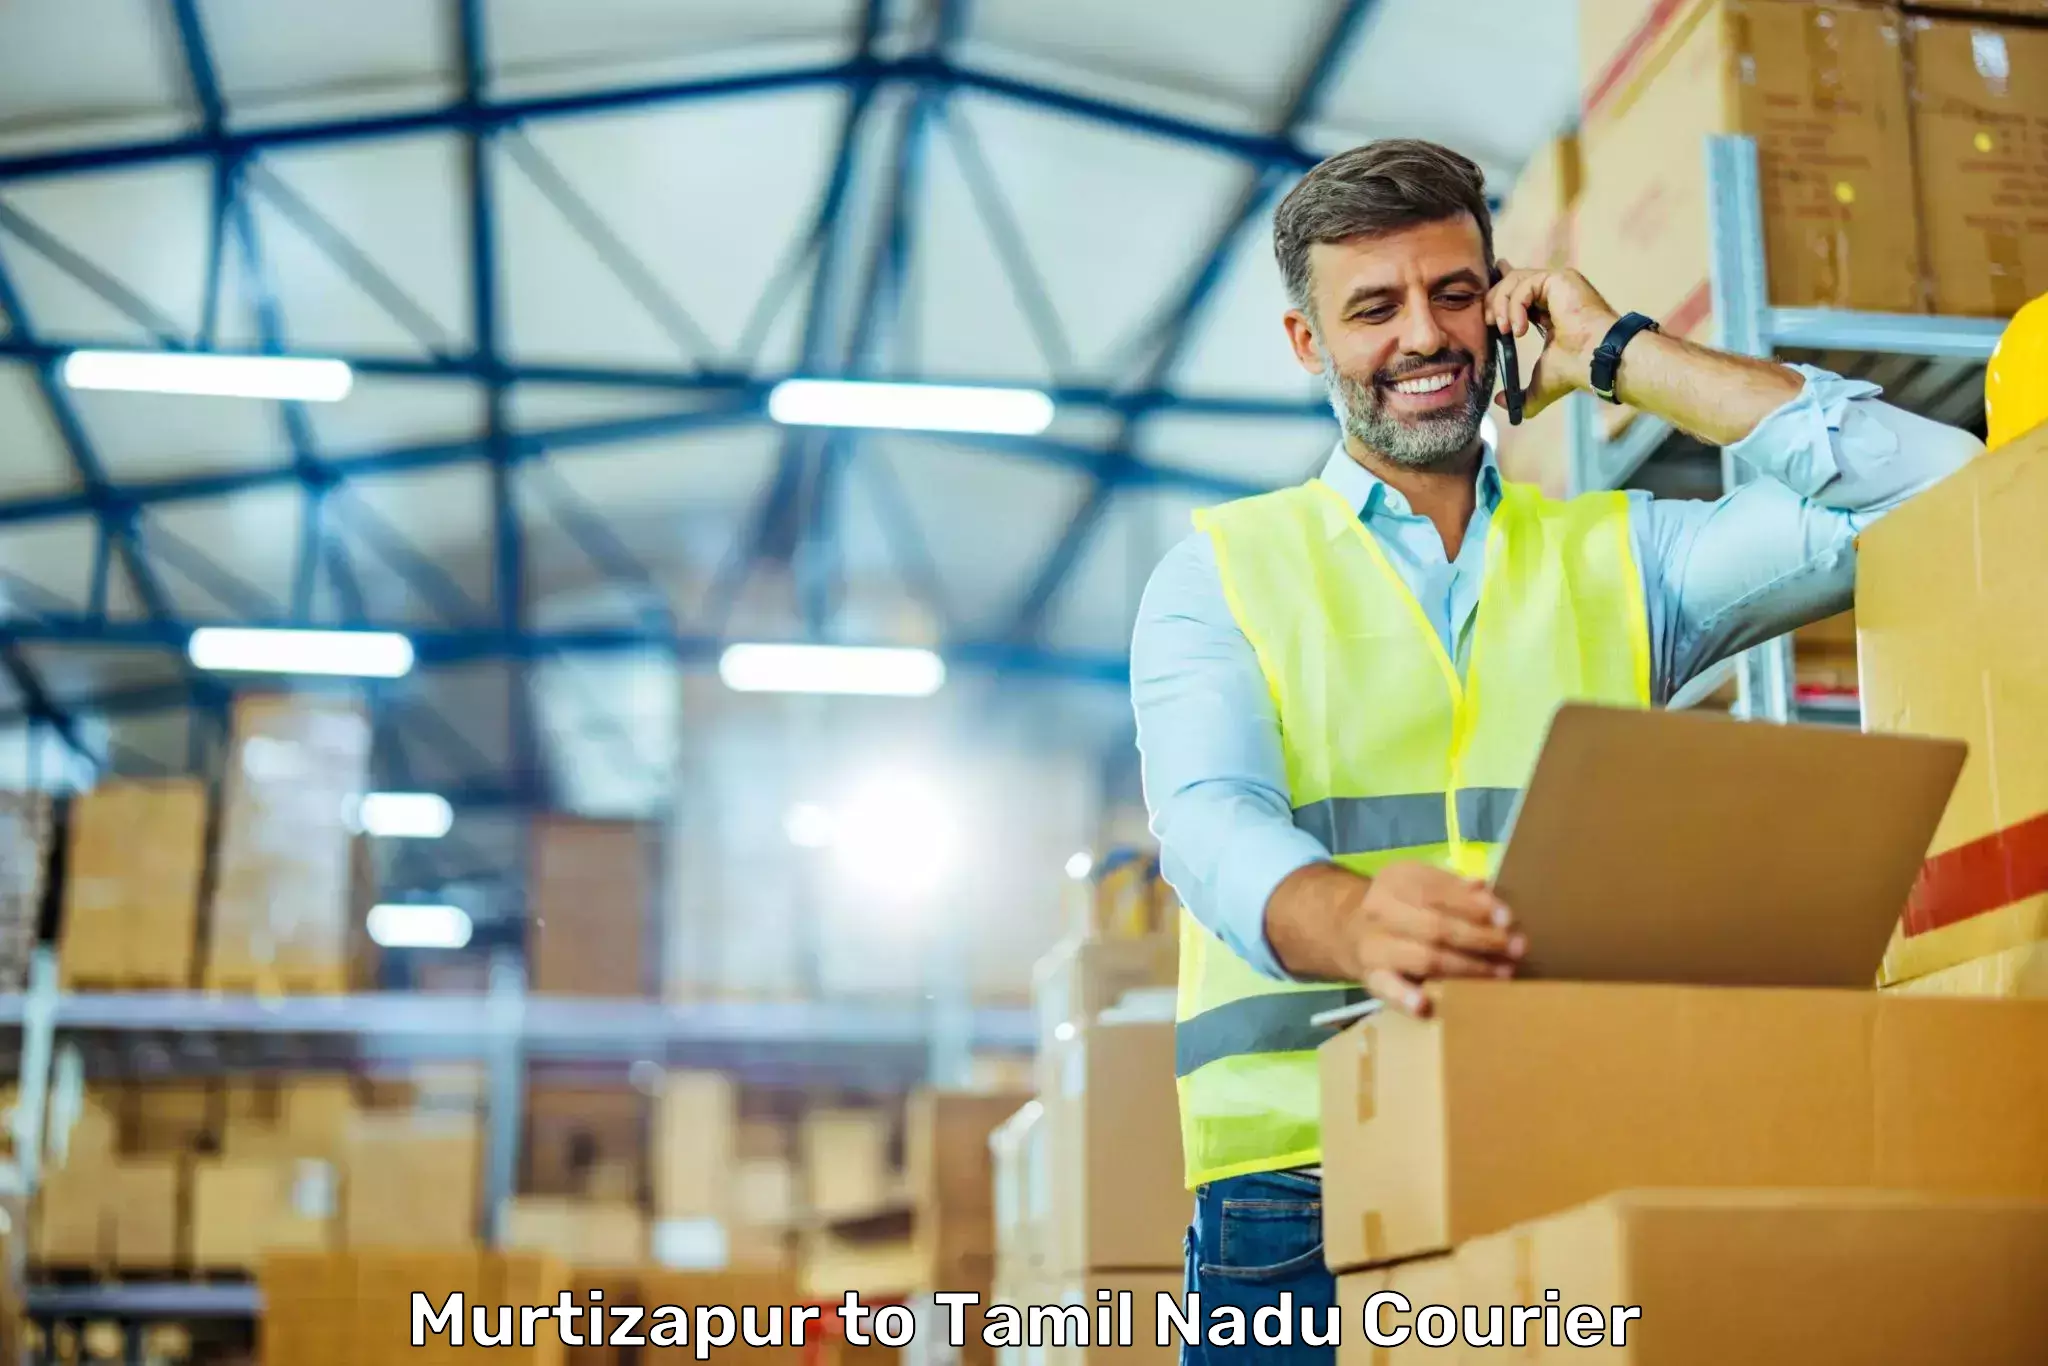 On-call courier service Murtizapur to Tuticorin Port